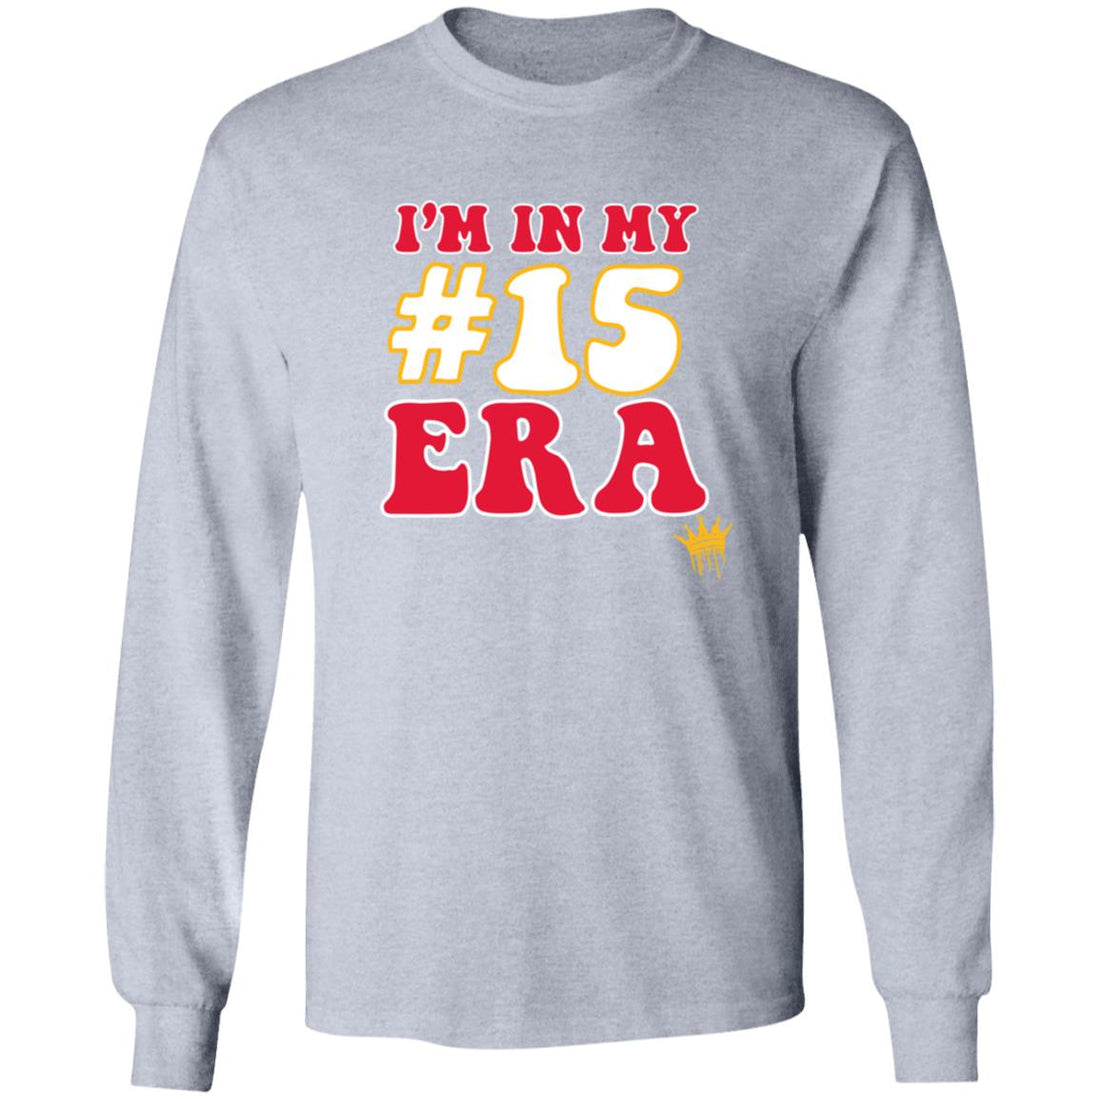 #15 ERA LS Ultra Cotton T-Shirt - T-Shirts - Positively Sassy - #15 ERA LS Ultra Cotton T-Shirt